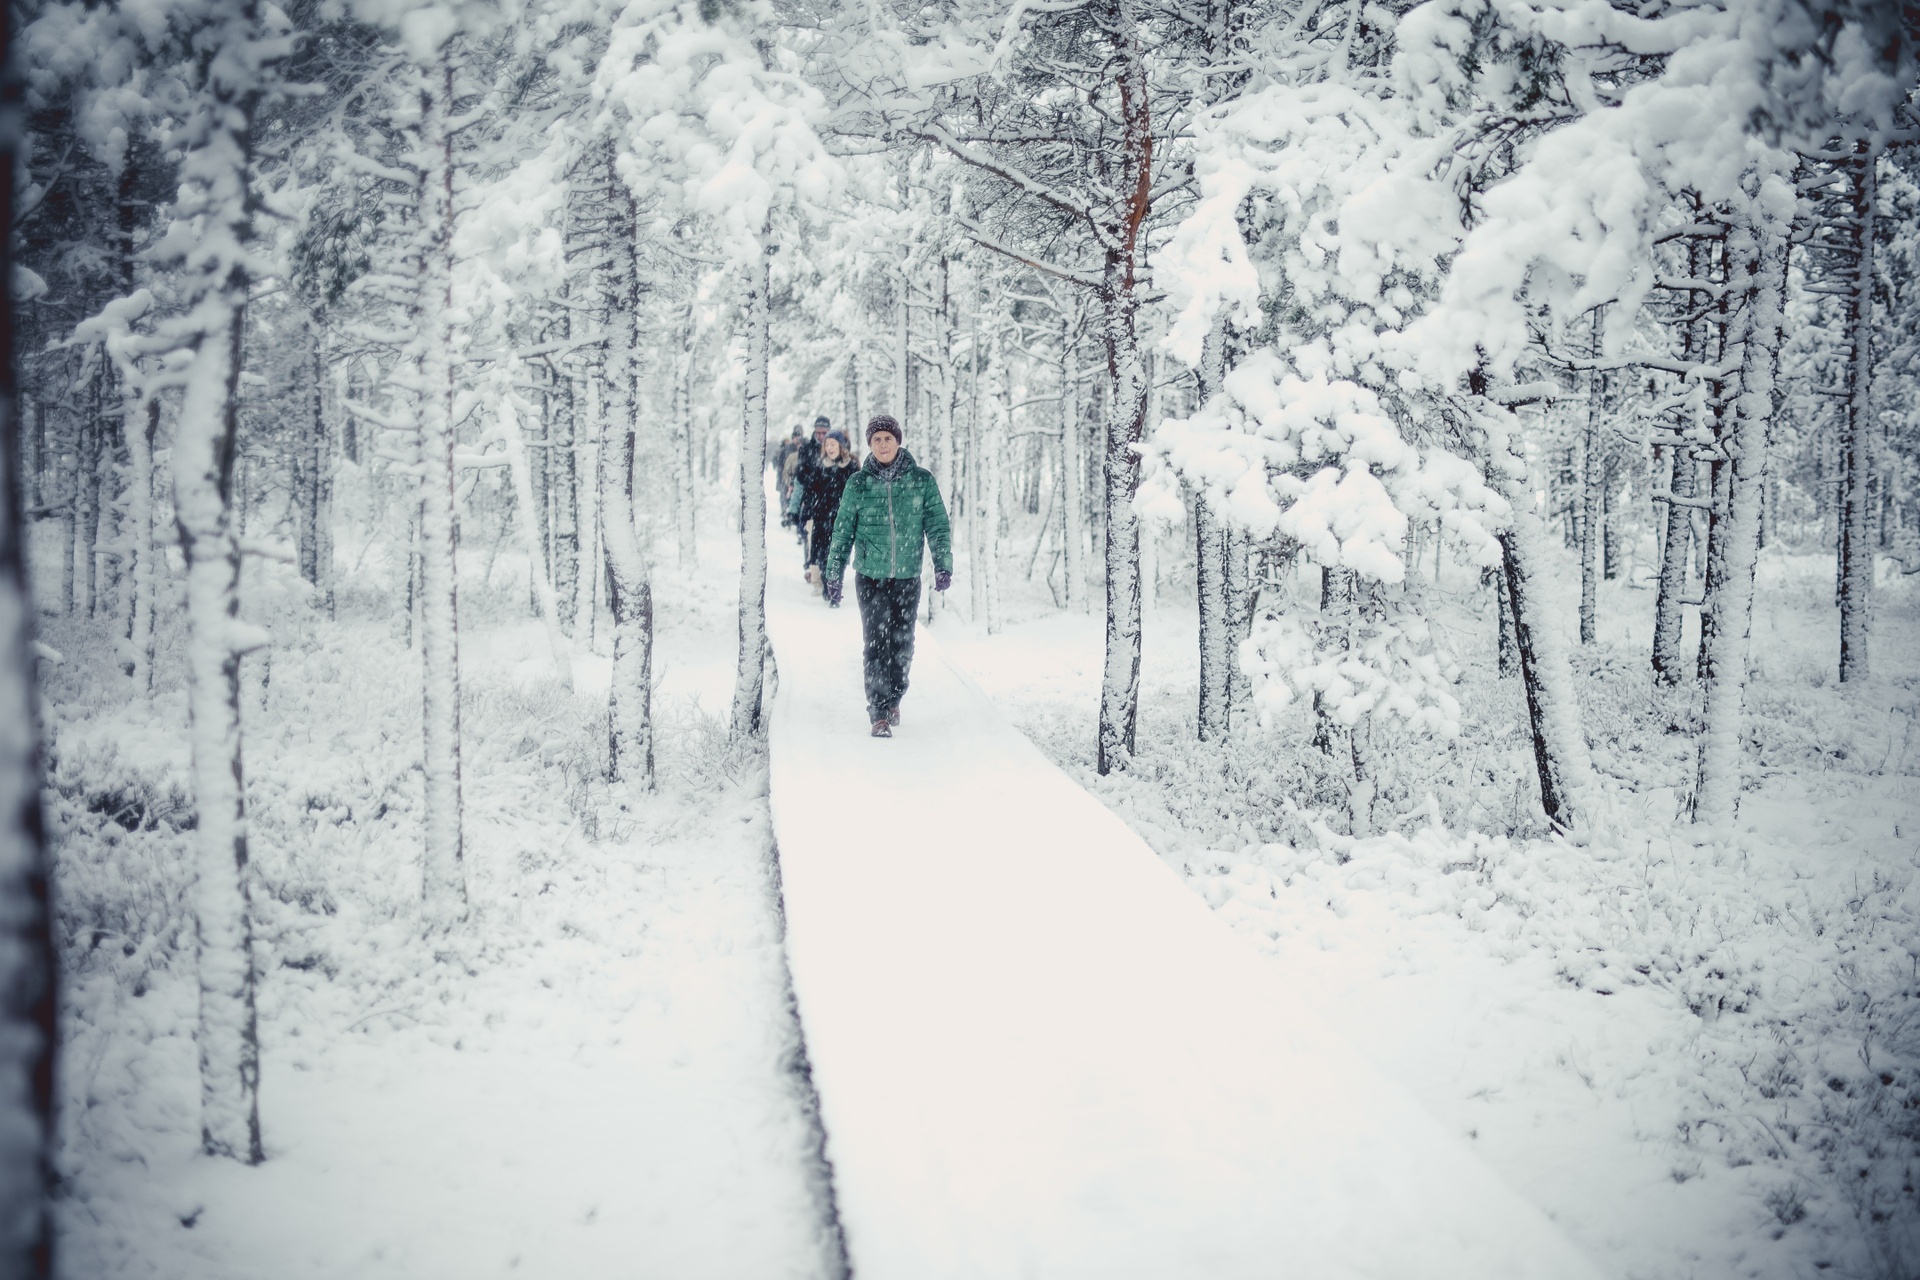 Visit a magical winter wonderland!